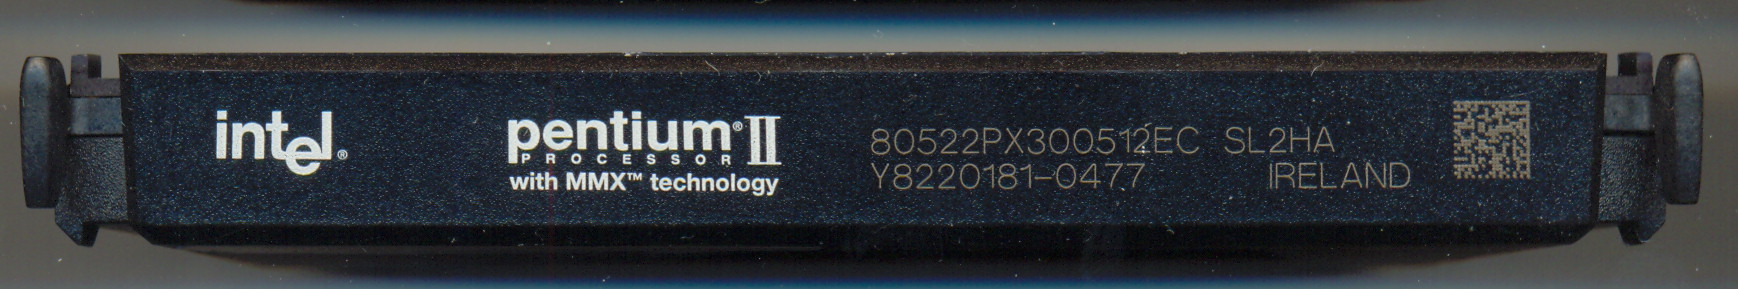 Intel Pentium II 80523PX300512EC SL2HA IRELAND